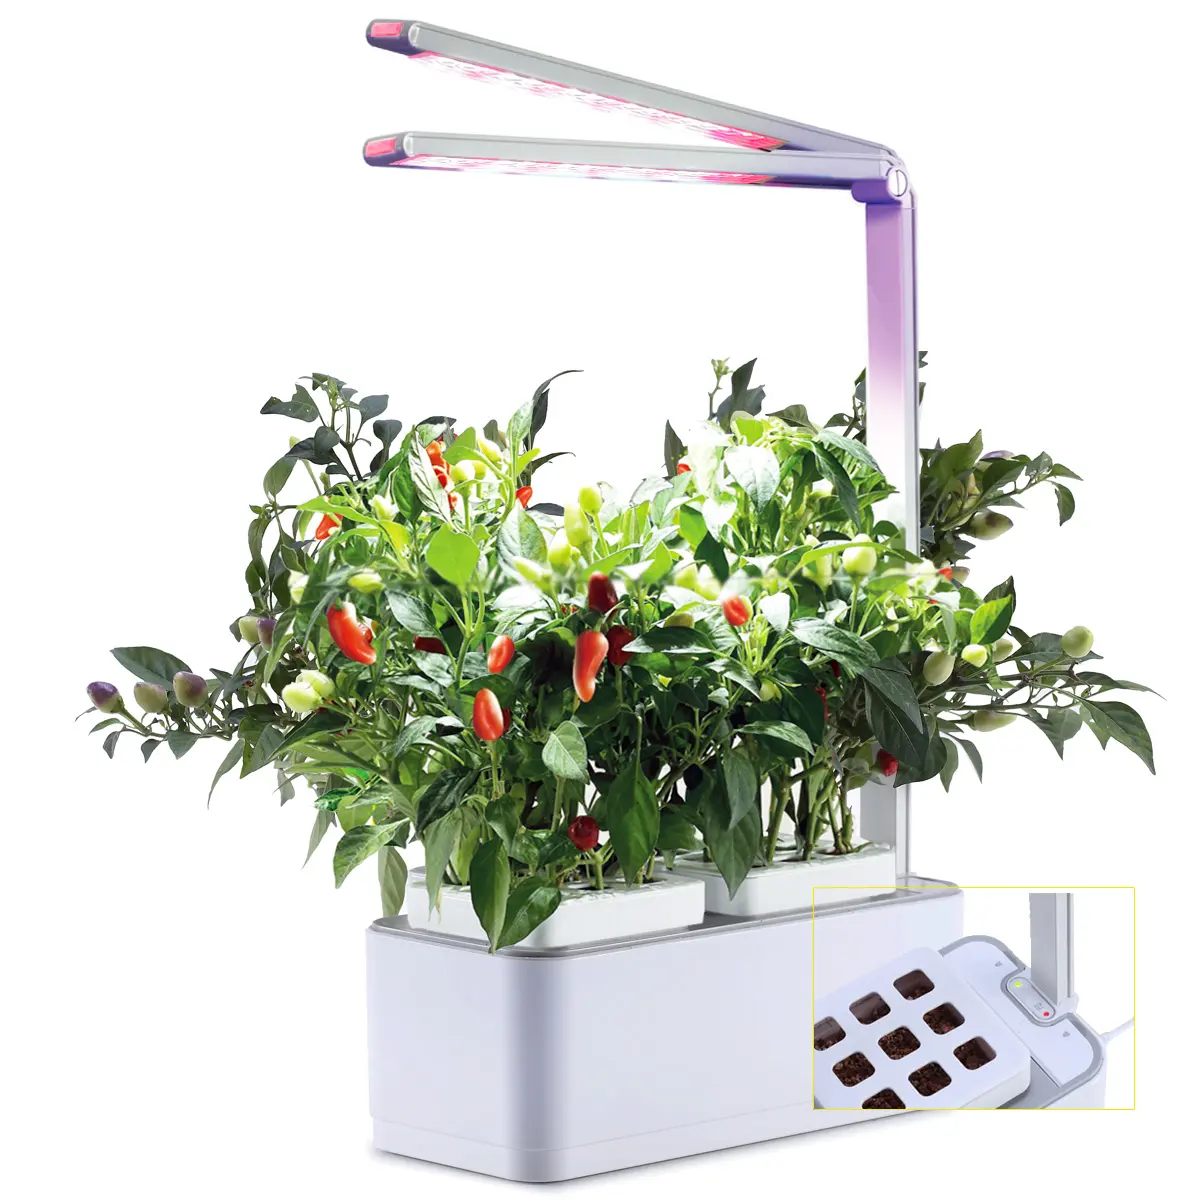 OEM Customized Smart garden indoor herb garden planters hydroponics system home kitchen smart planter pot